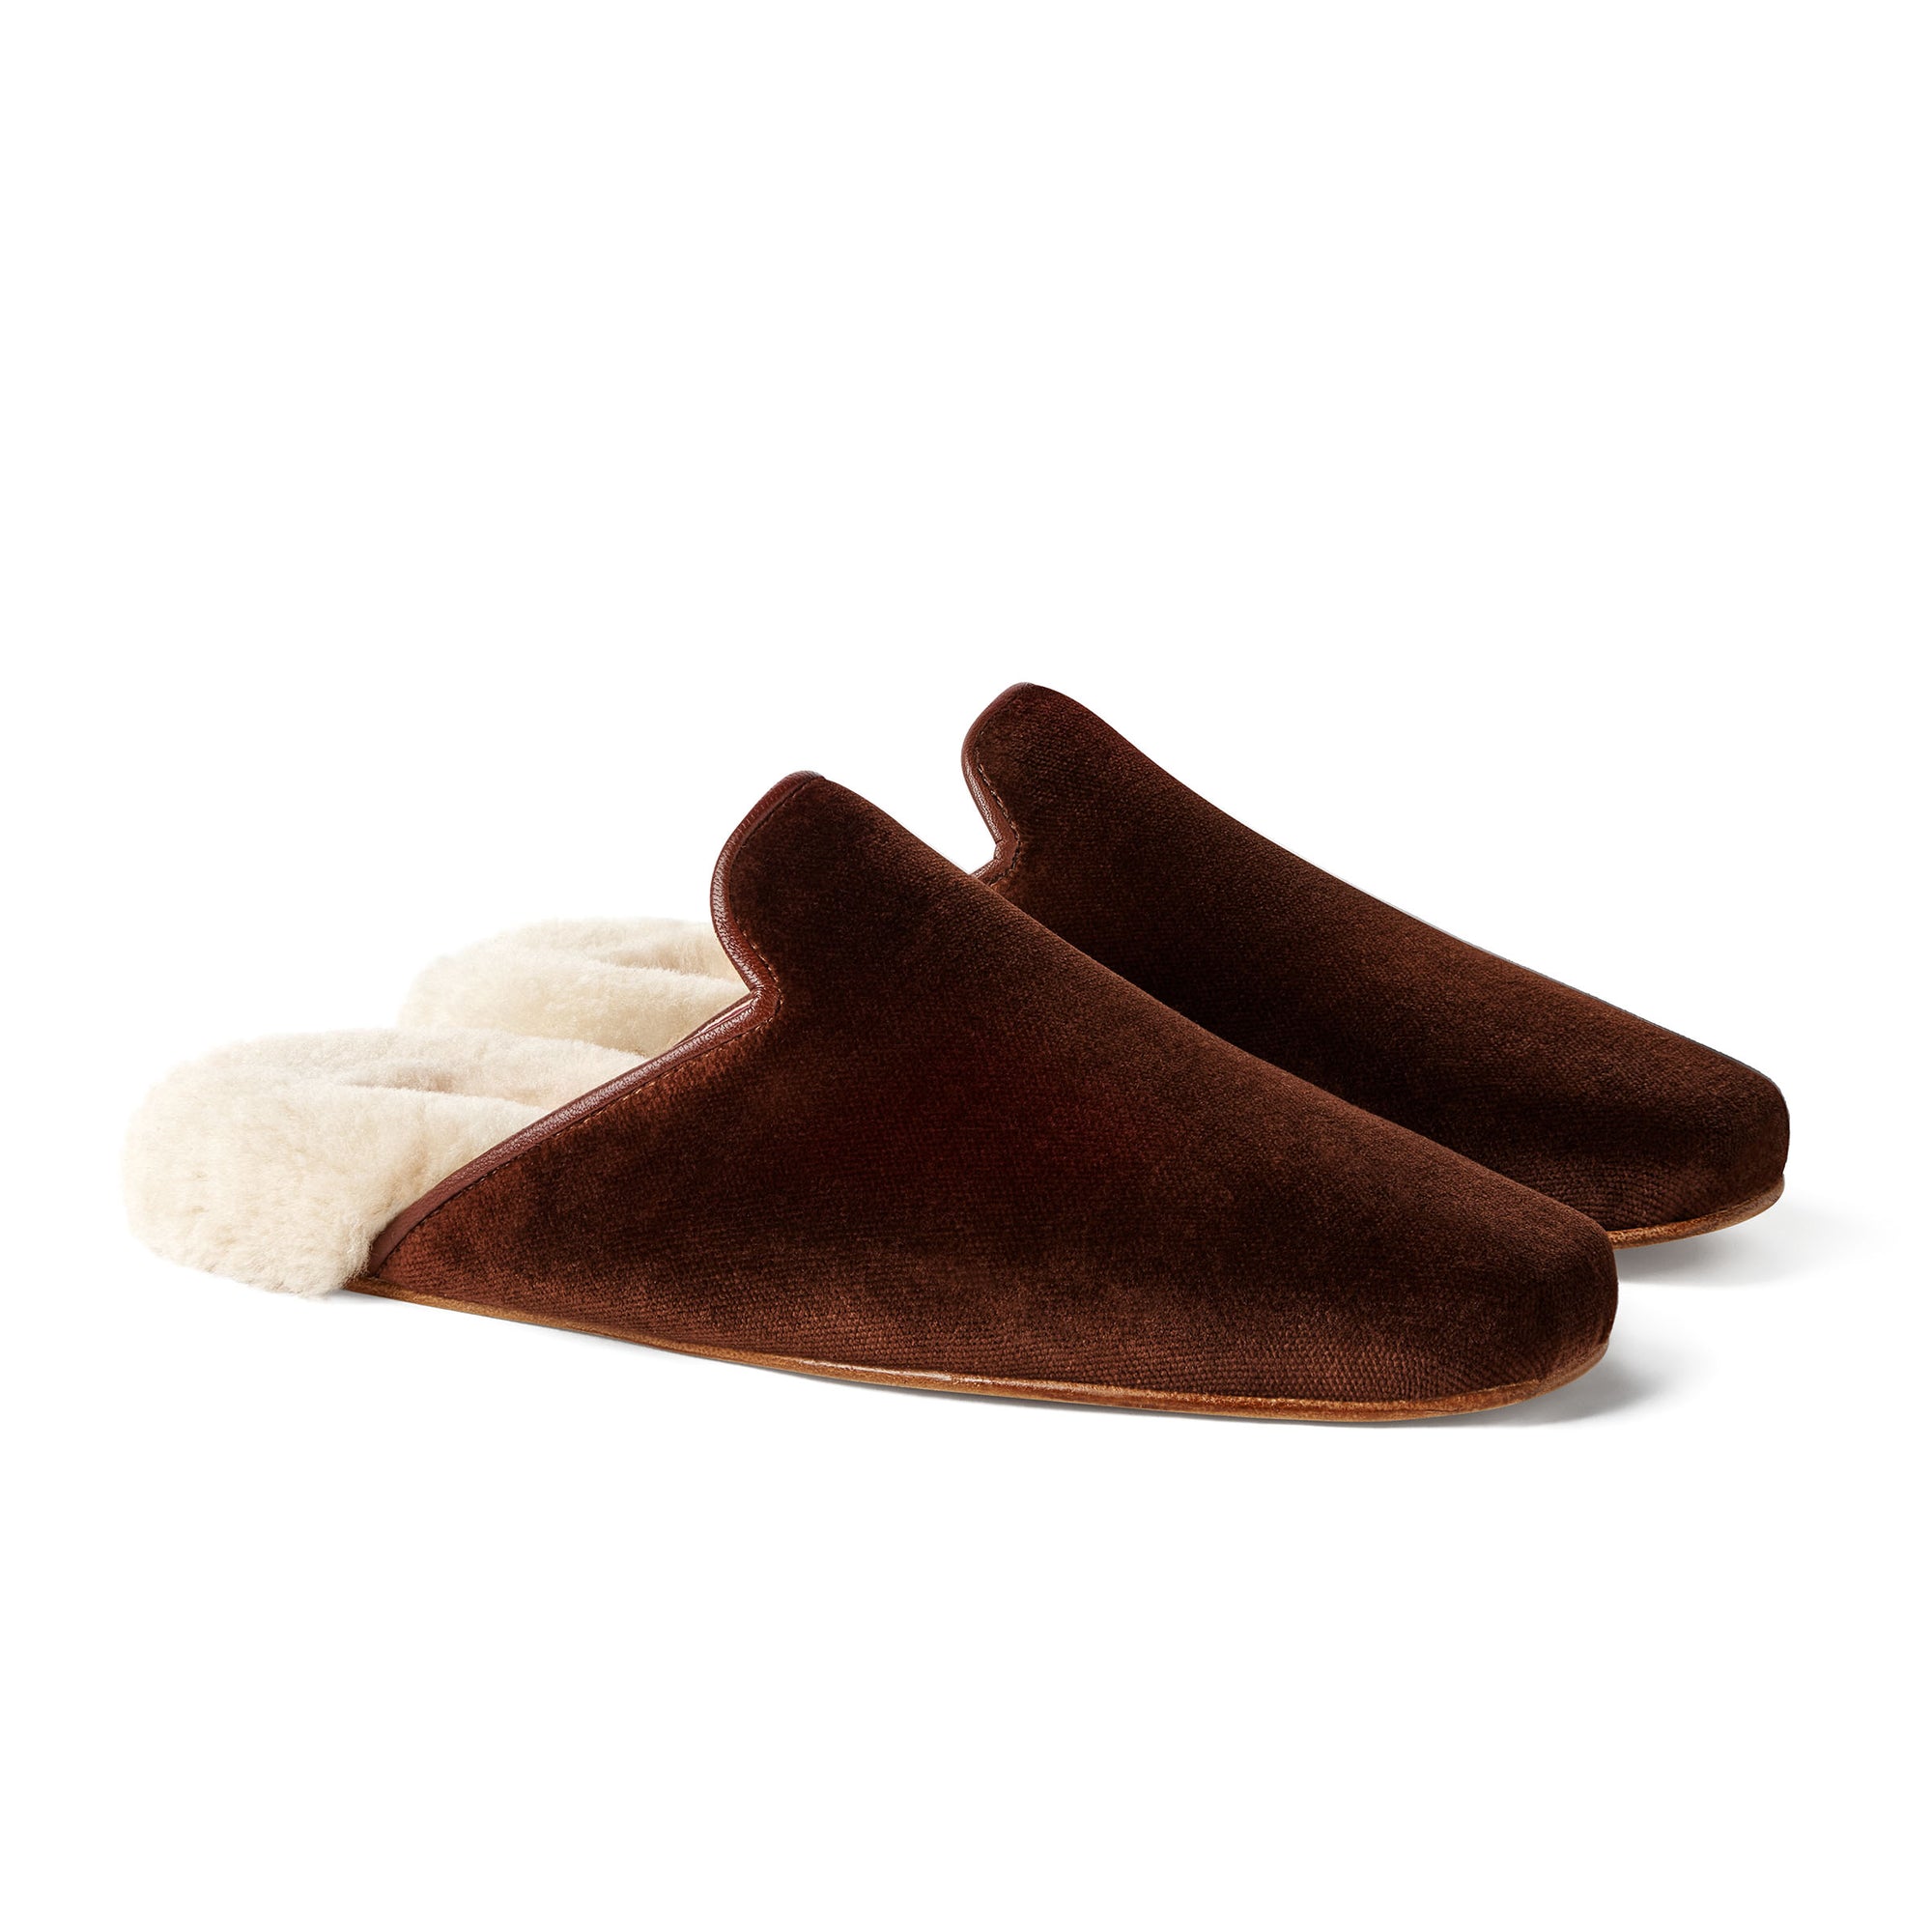 Inabo Women's Hilma slipper in brown velvet and white shearling